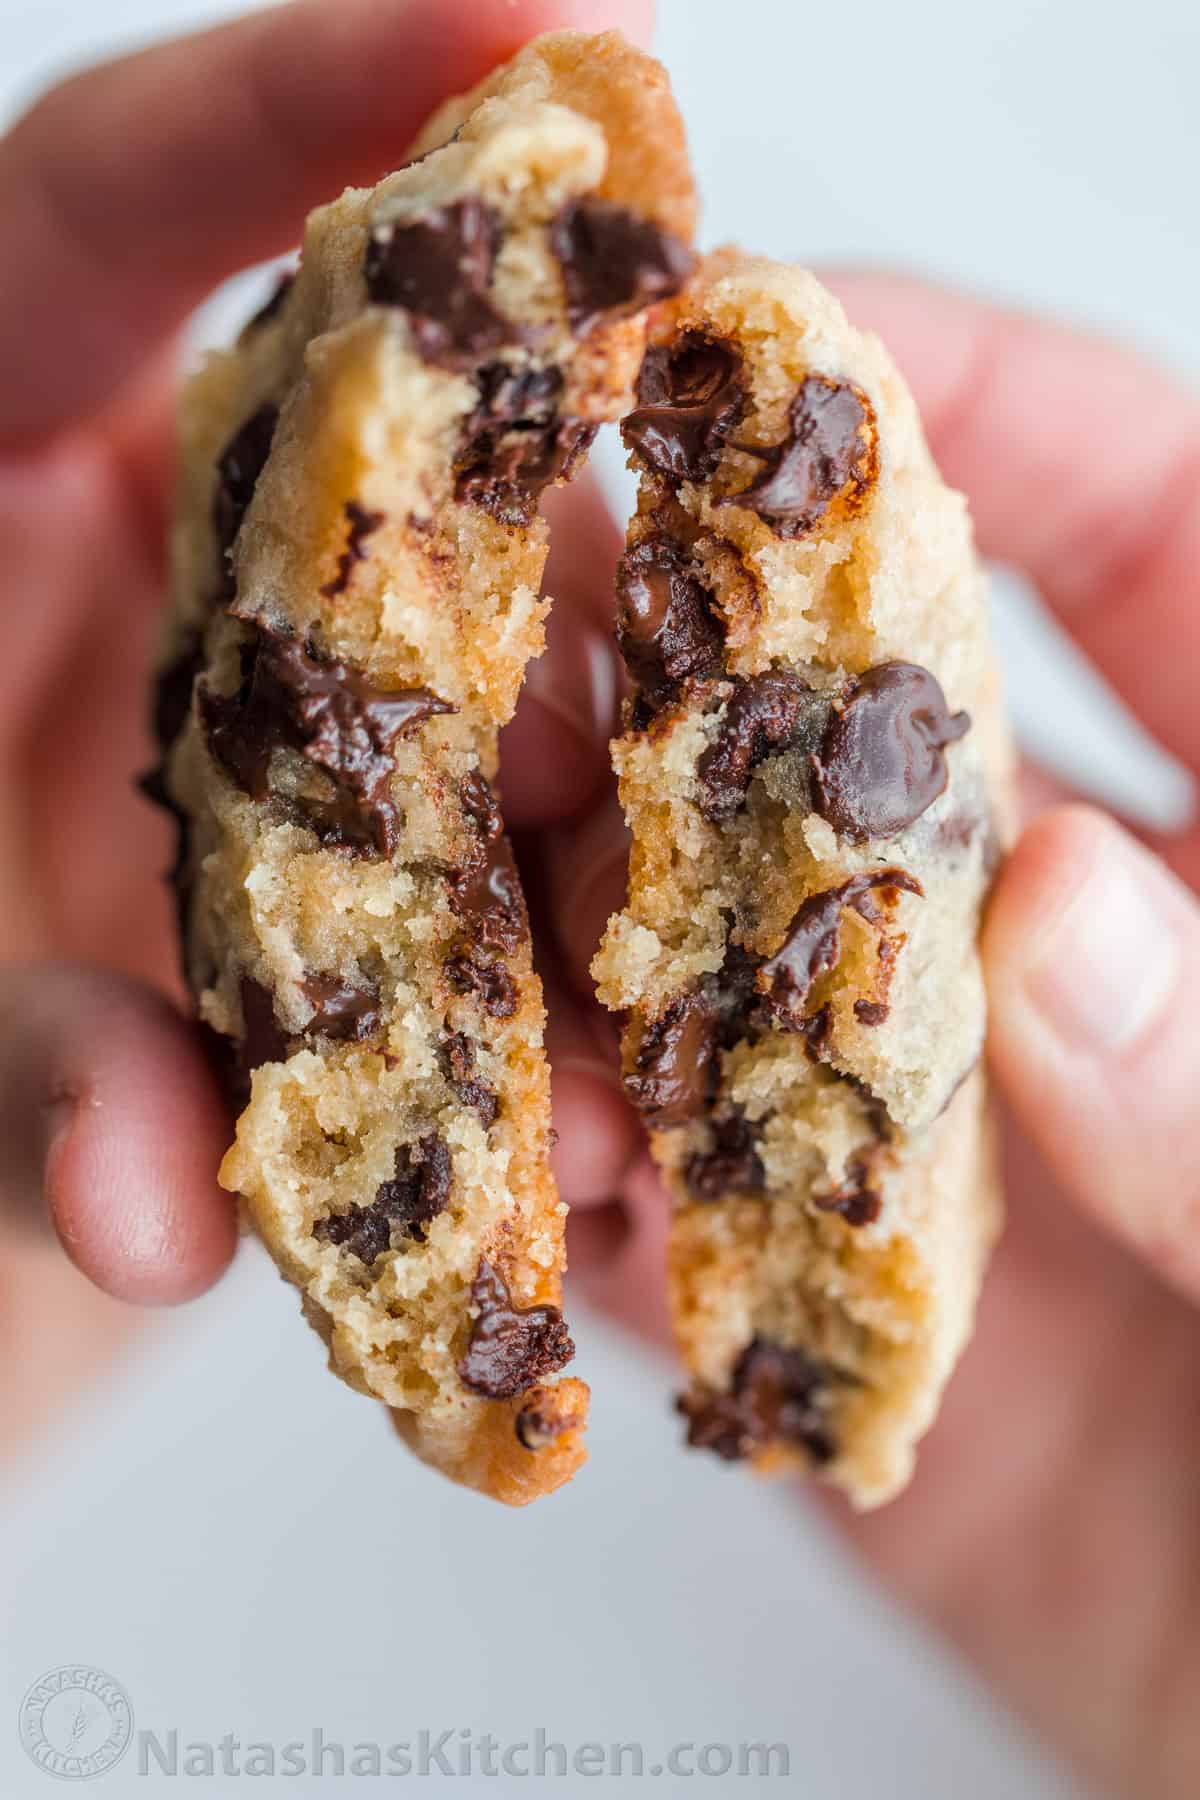 Soft chocolate chip cookies broken in half to show moist chocolatey center